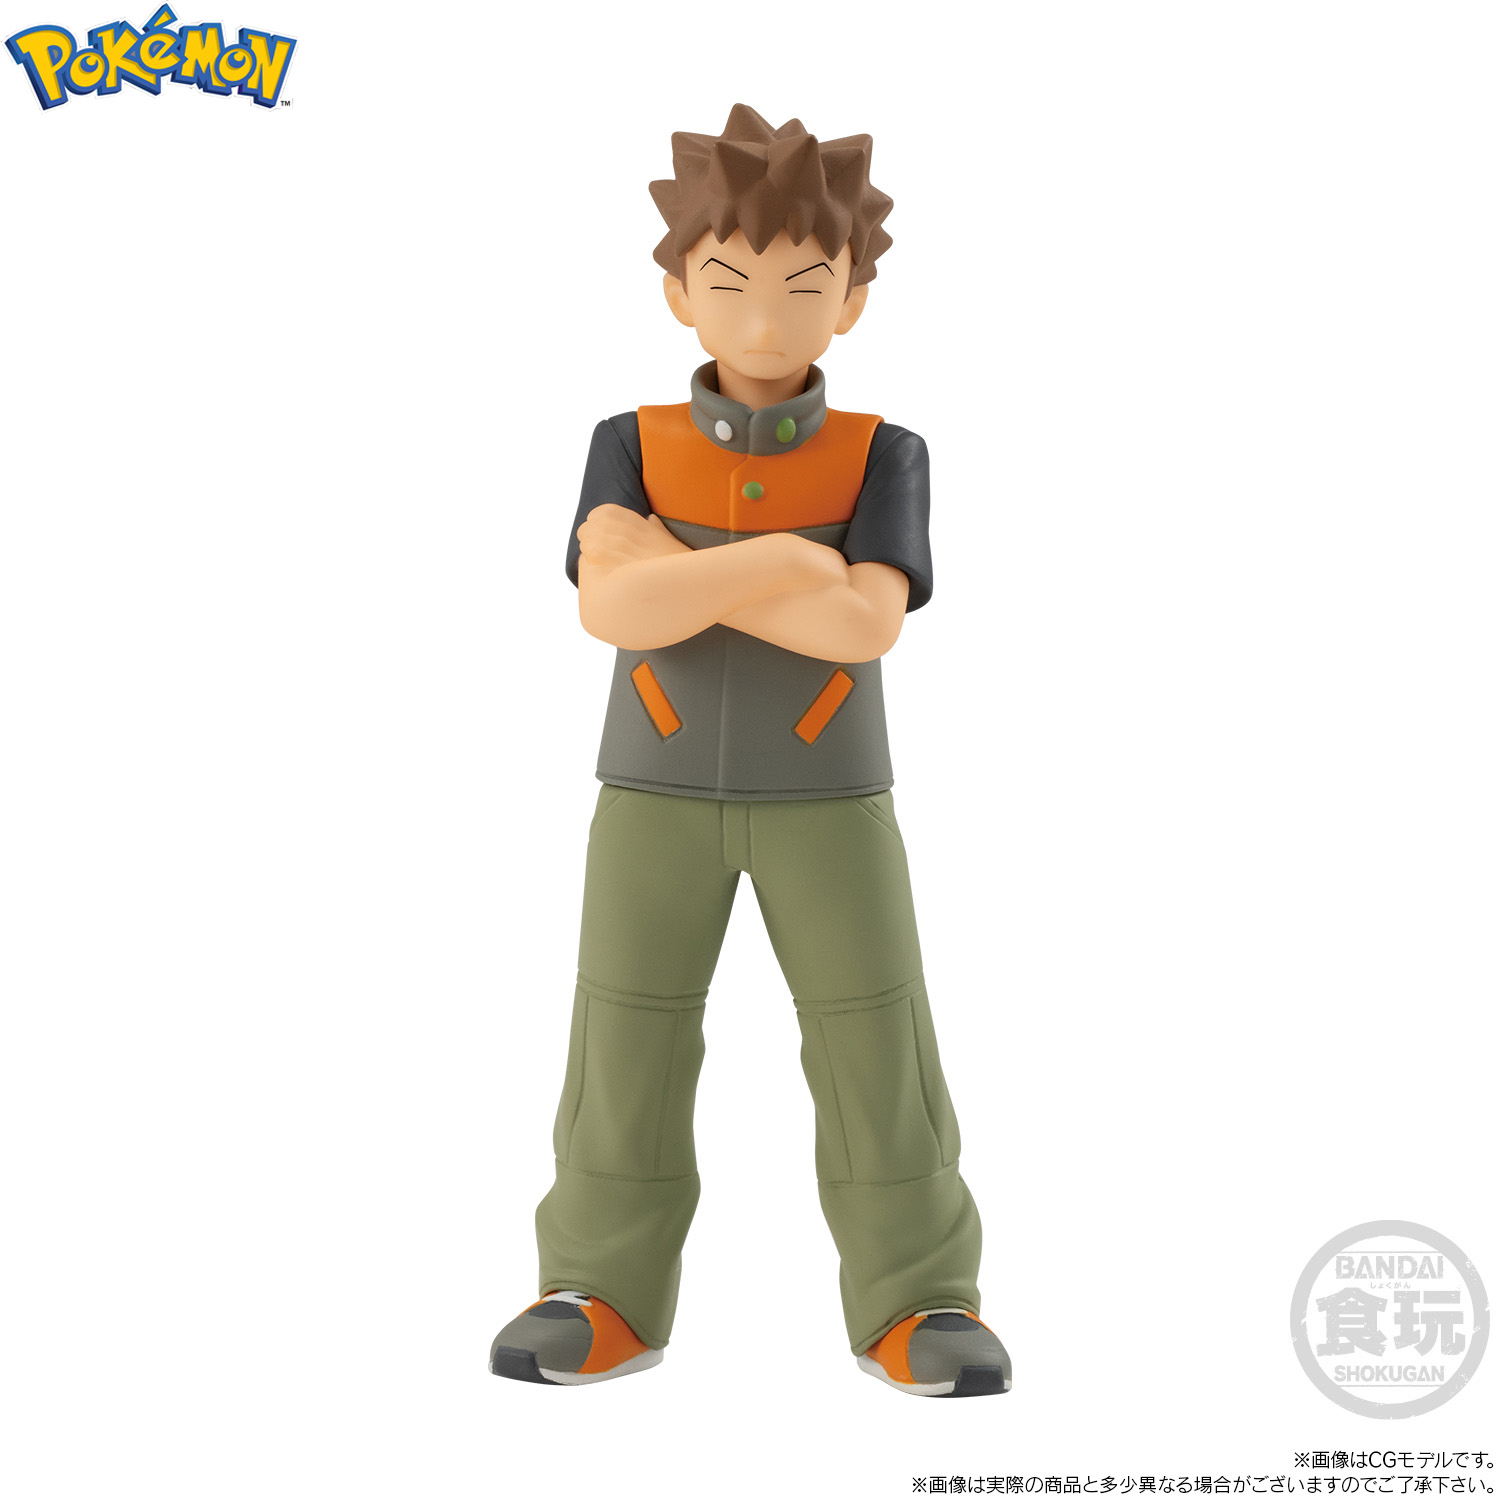 Brock (anime) - Bulbapedia, the community-driven Pokémon encyclopedia